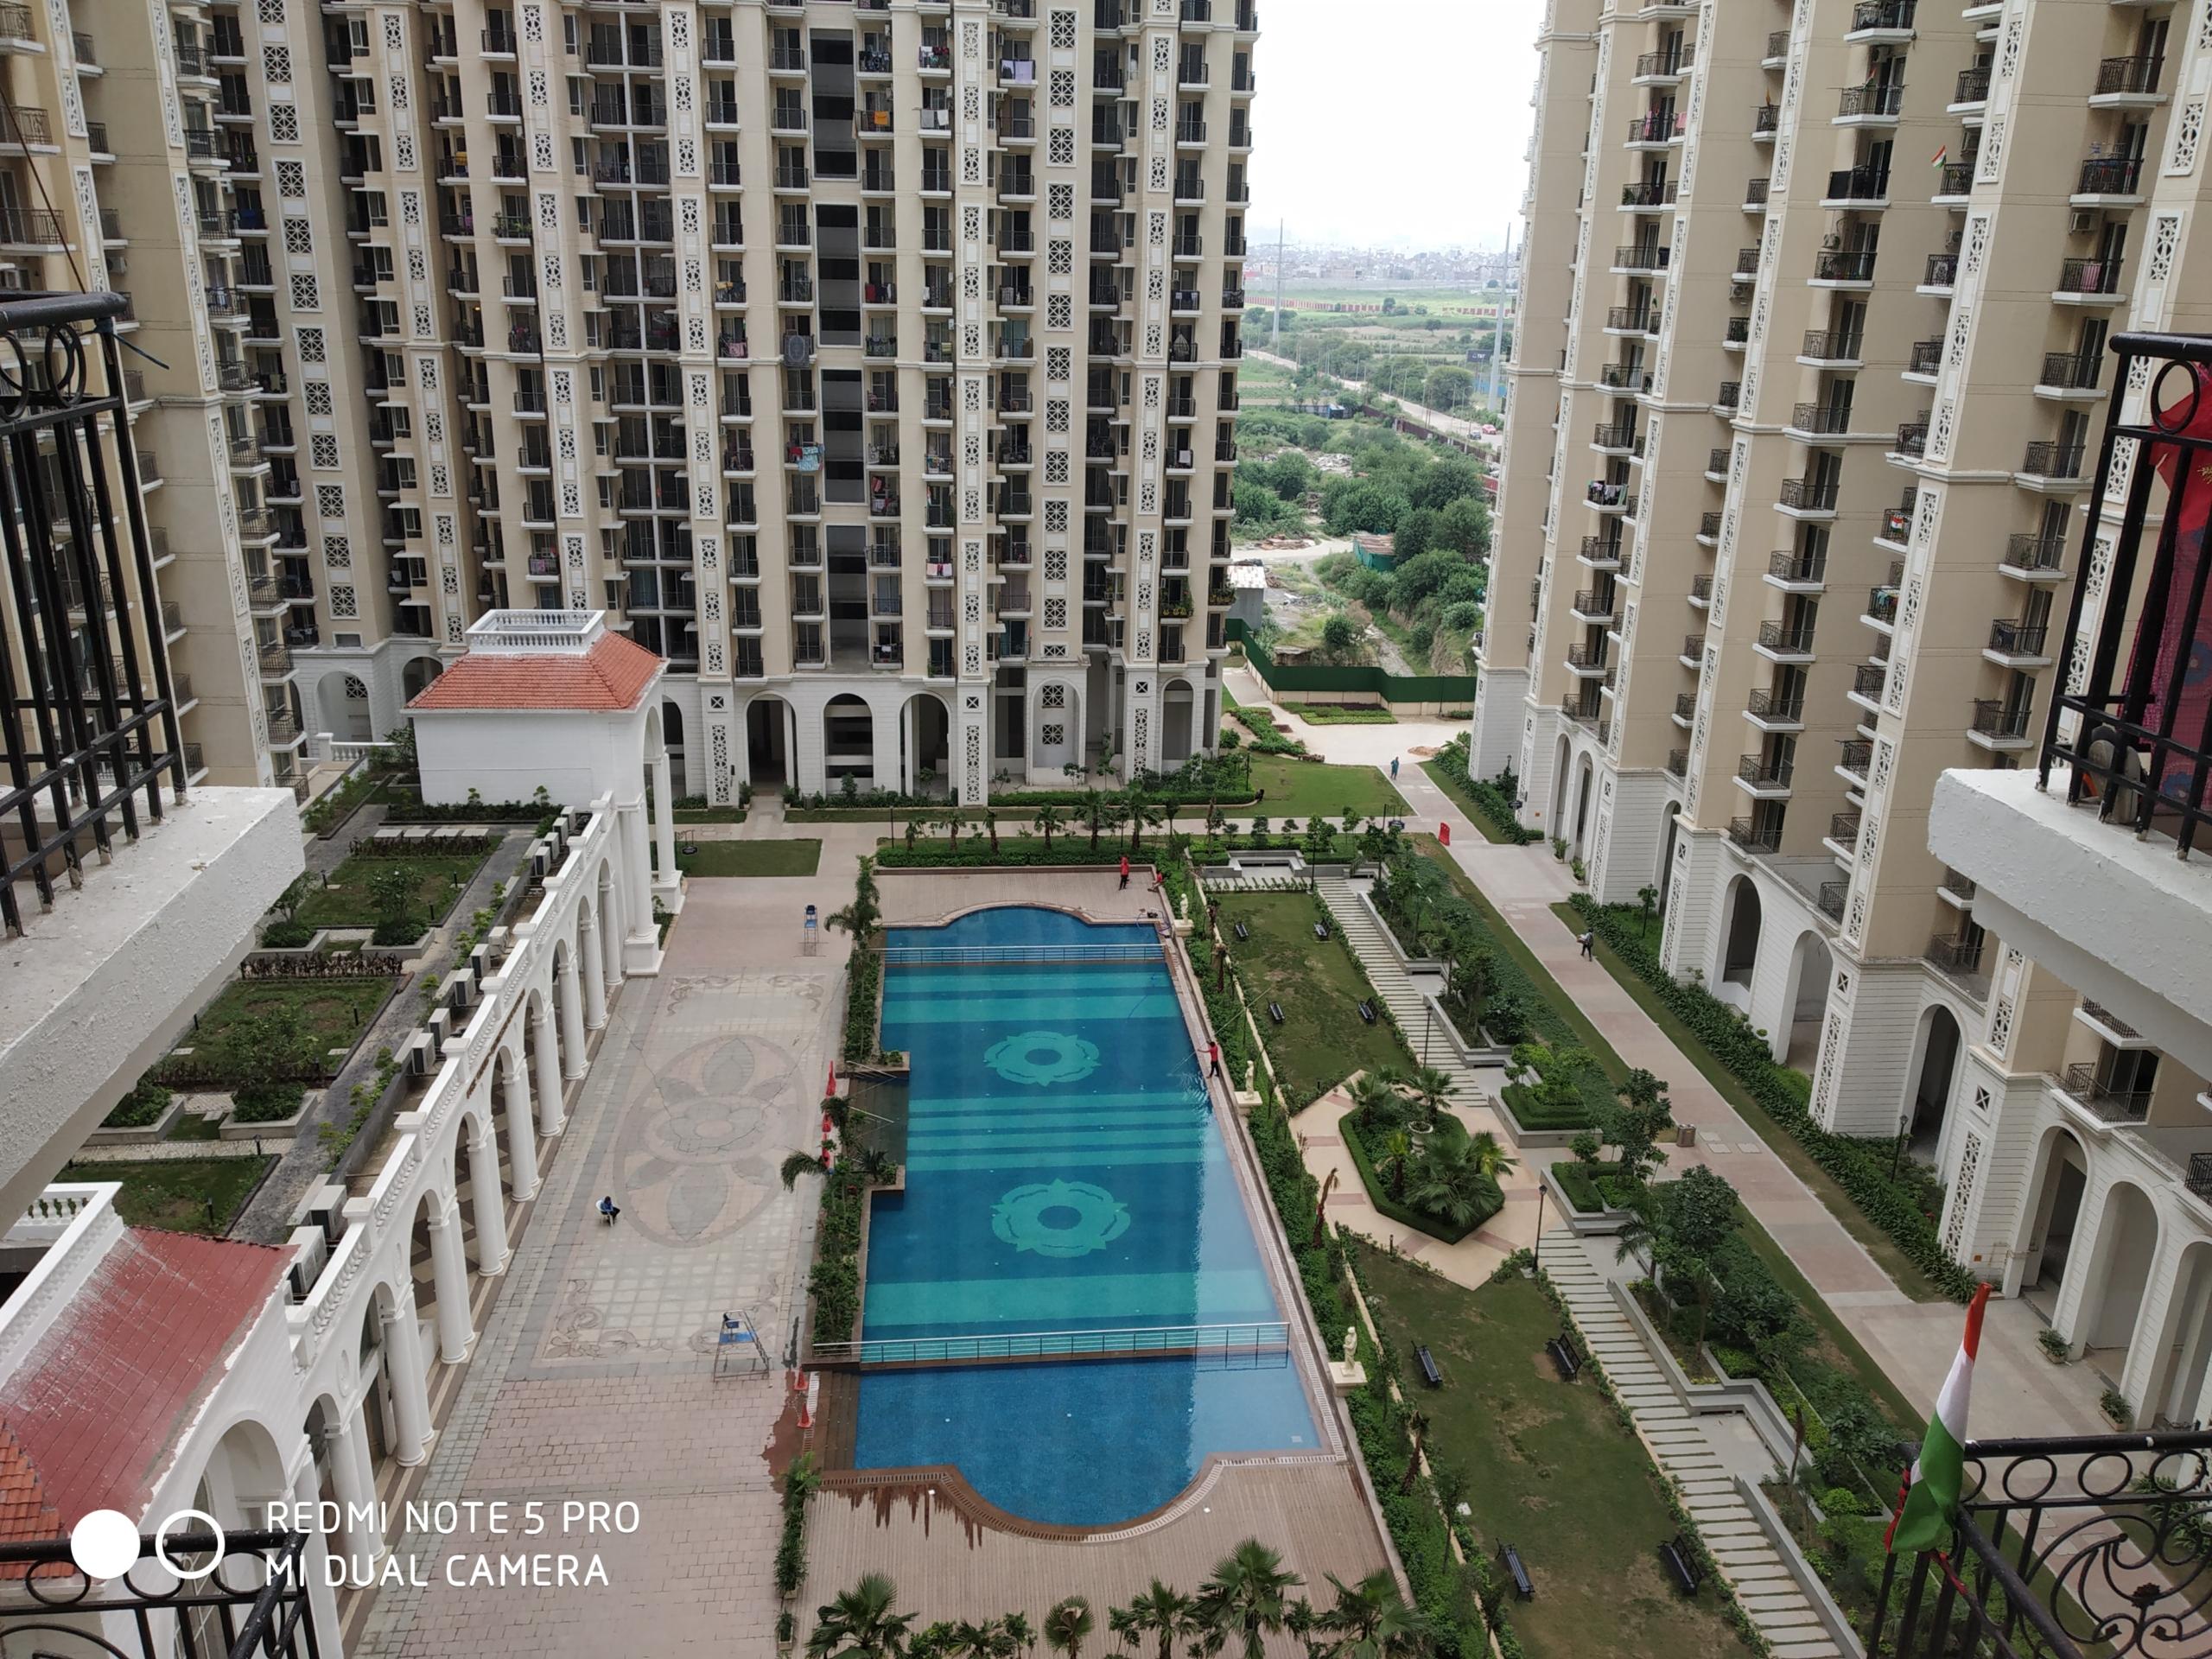 Flat for rent in Prateek Grand city, Resale flat in prateek grand city